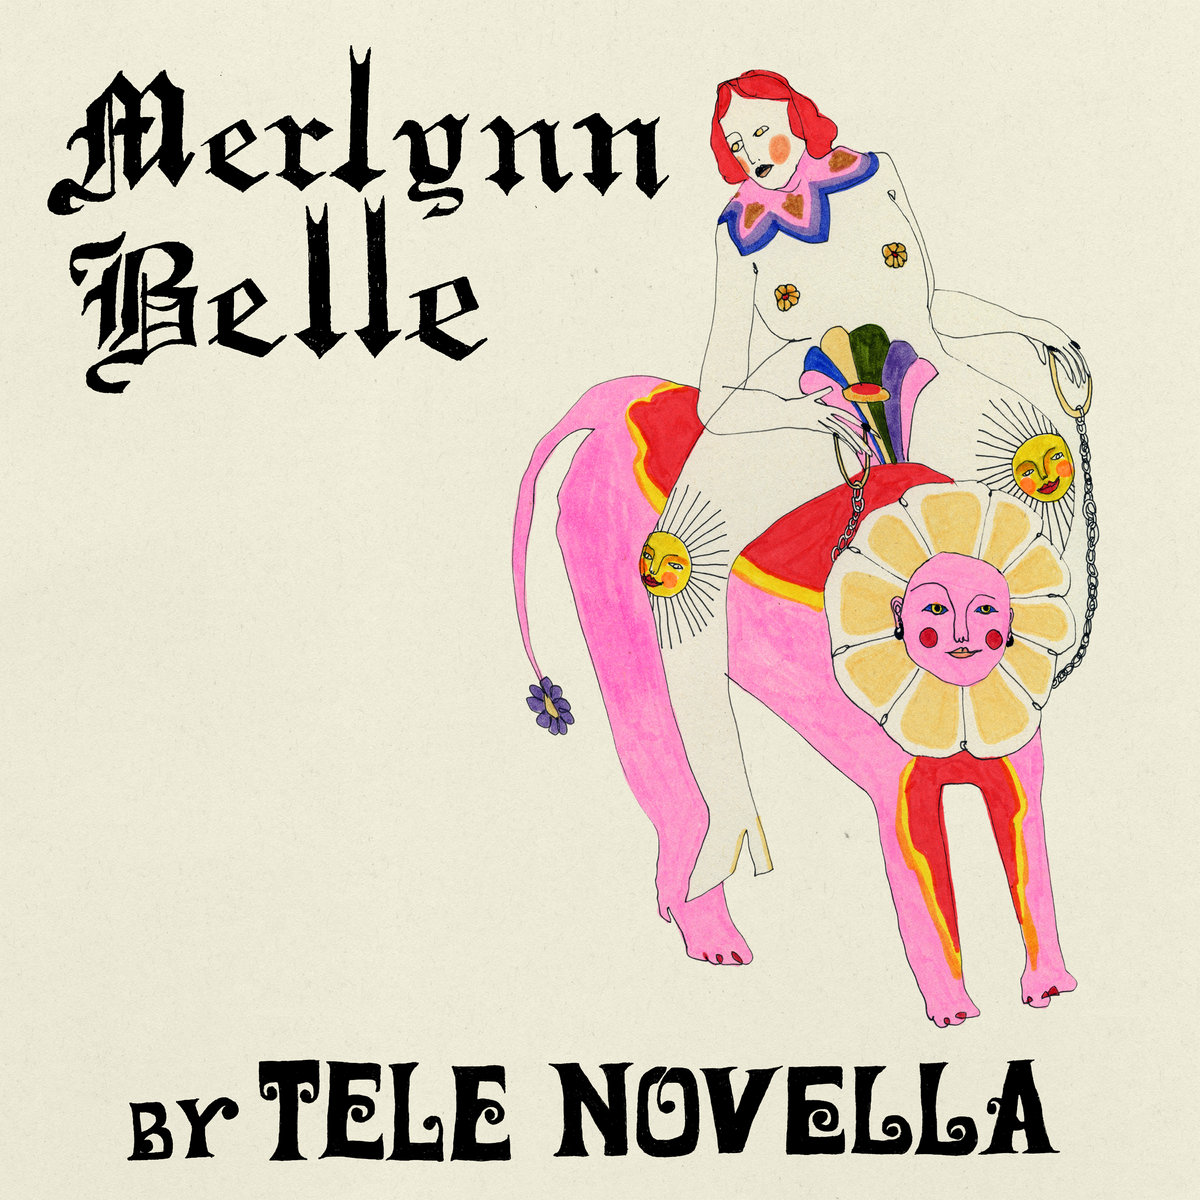 Merlynn Belle by Tele Novella